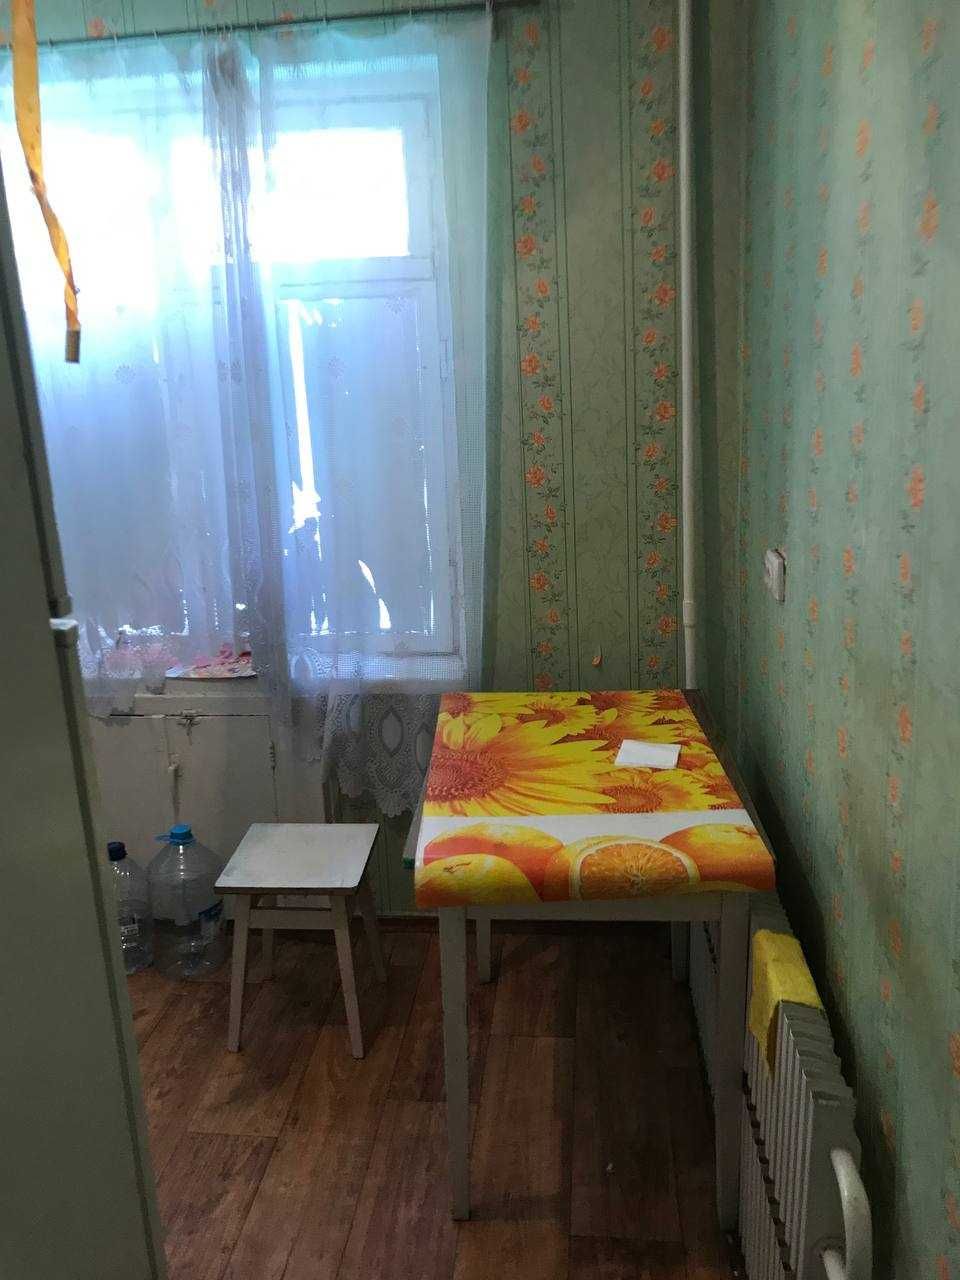 Квартира 2-х комнатная на Ингульце, под ремонт/магазин.